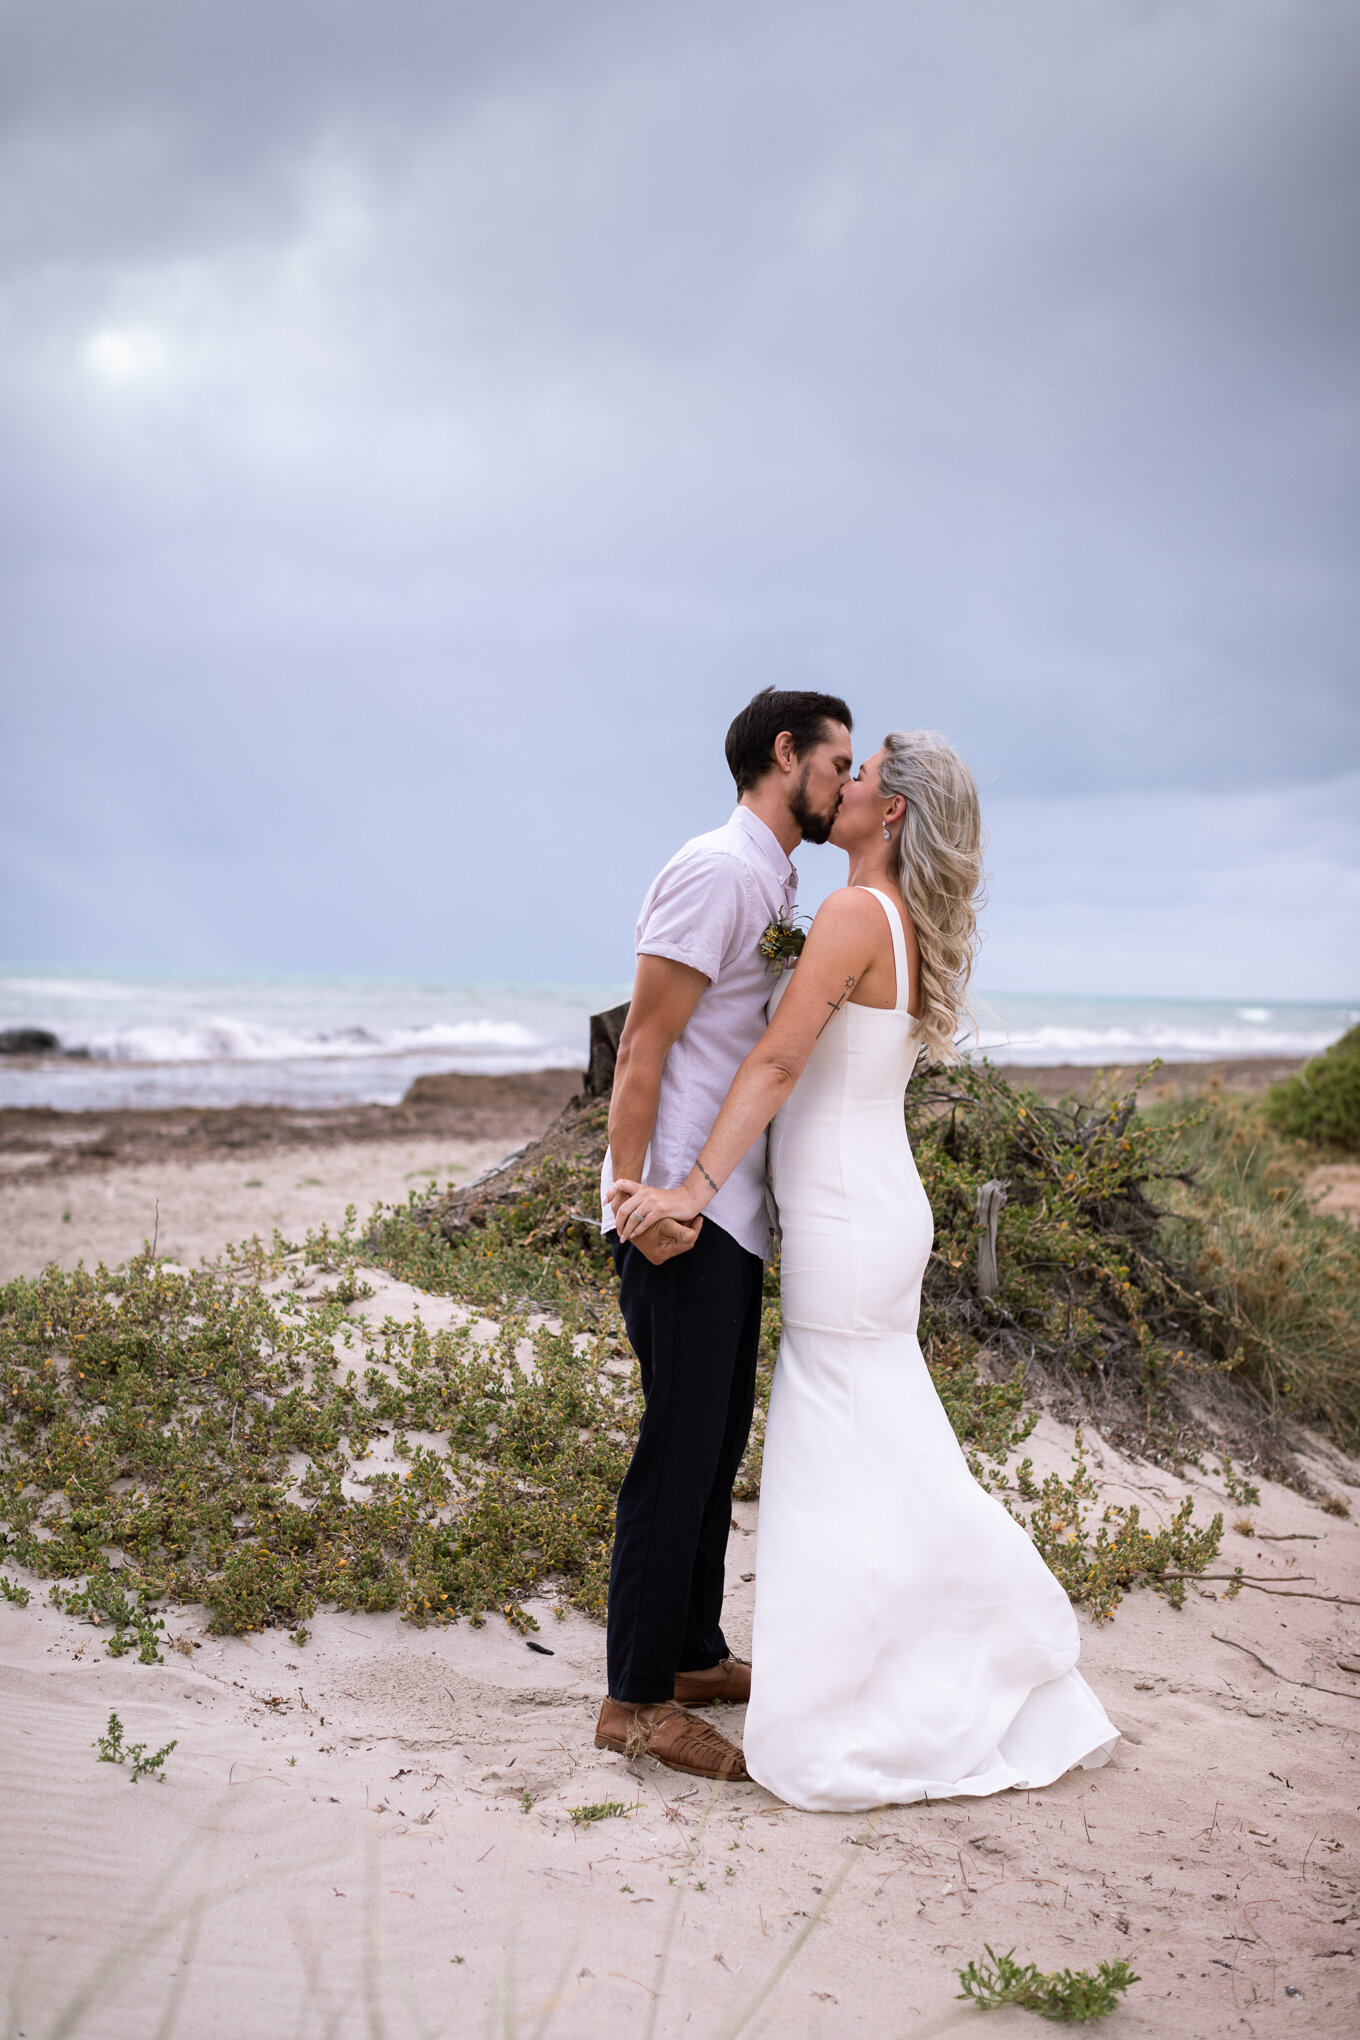 Skyla & Kym wedding beach photos.jpg